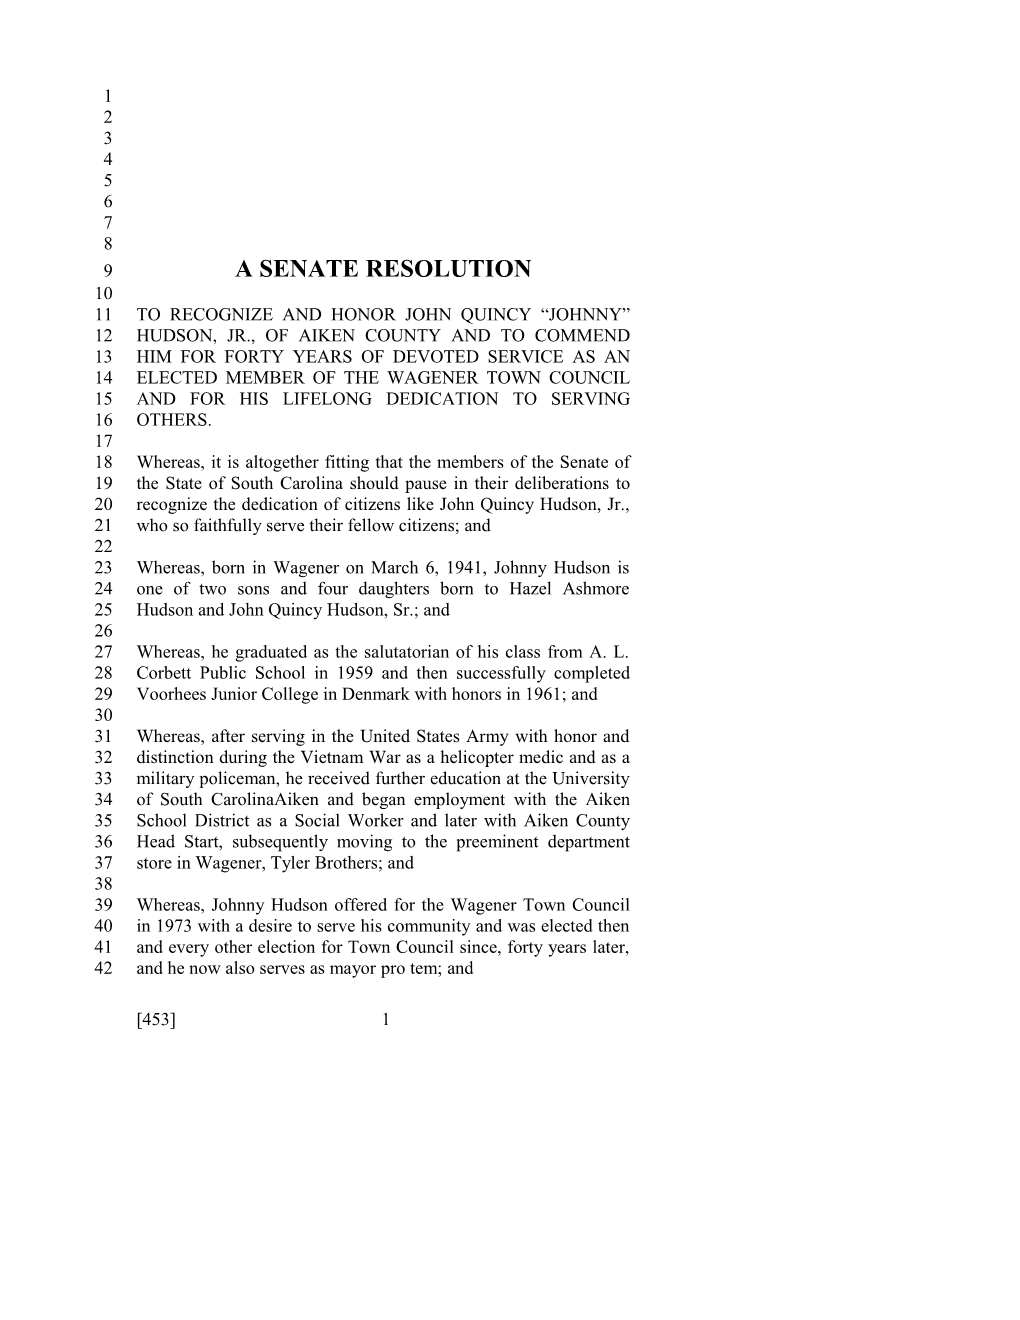 A Senate Resolution s5